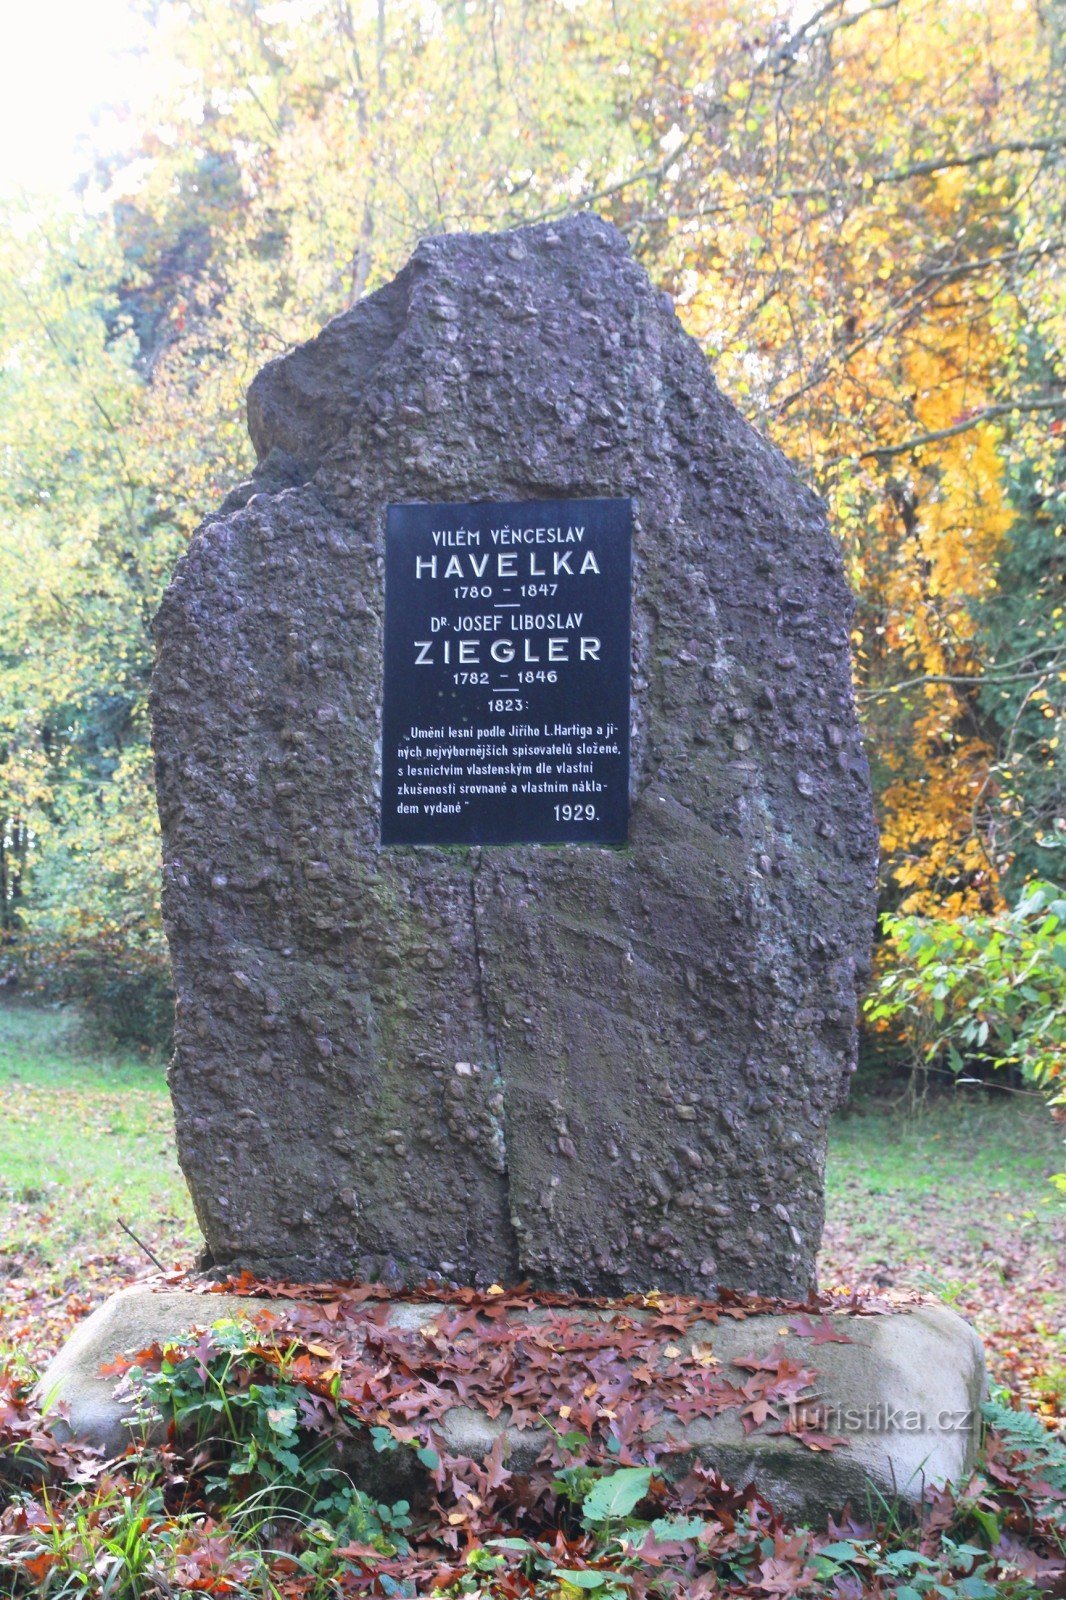 VV ハヴェルカと JL ツィーグラーの記念碑